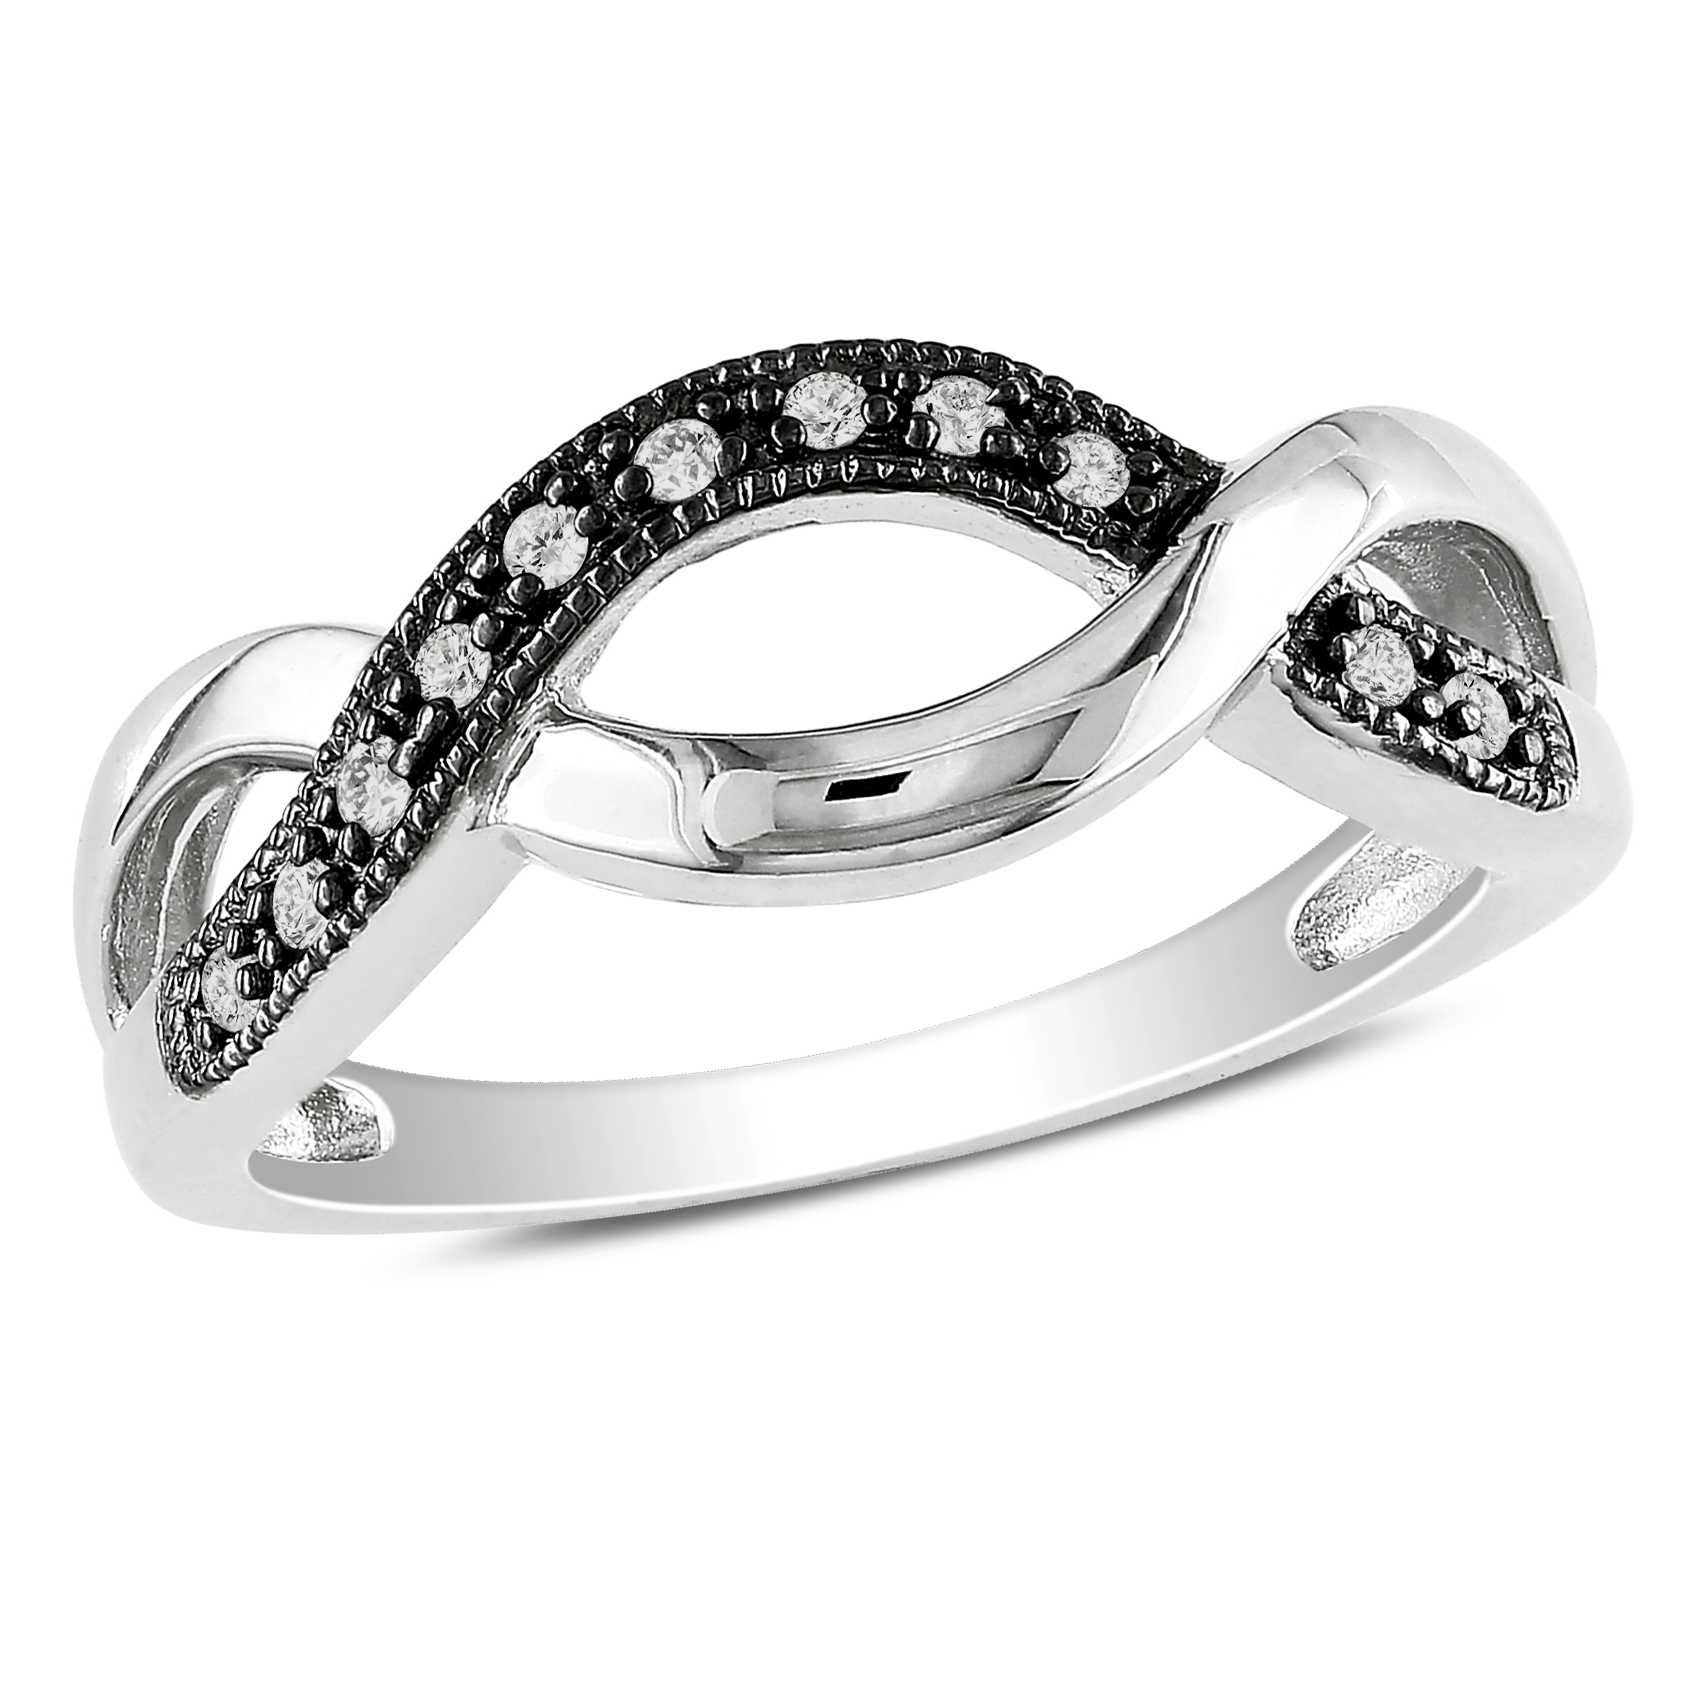 Sterling Silver with Black Rhodium Plating 1/10 CT Diamond Fashion Ring (I3)